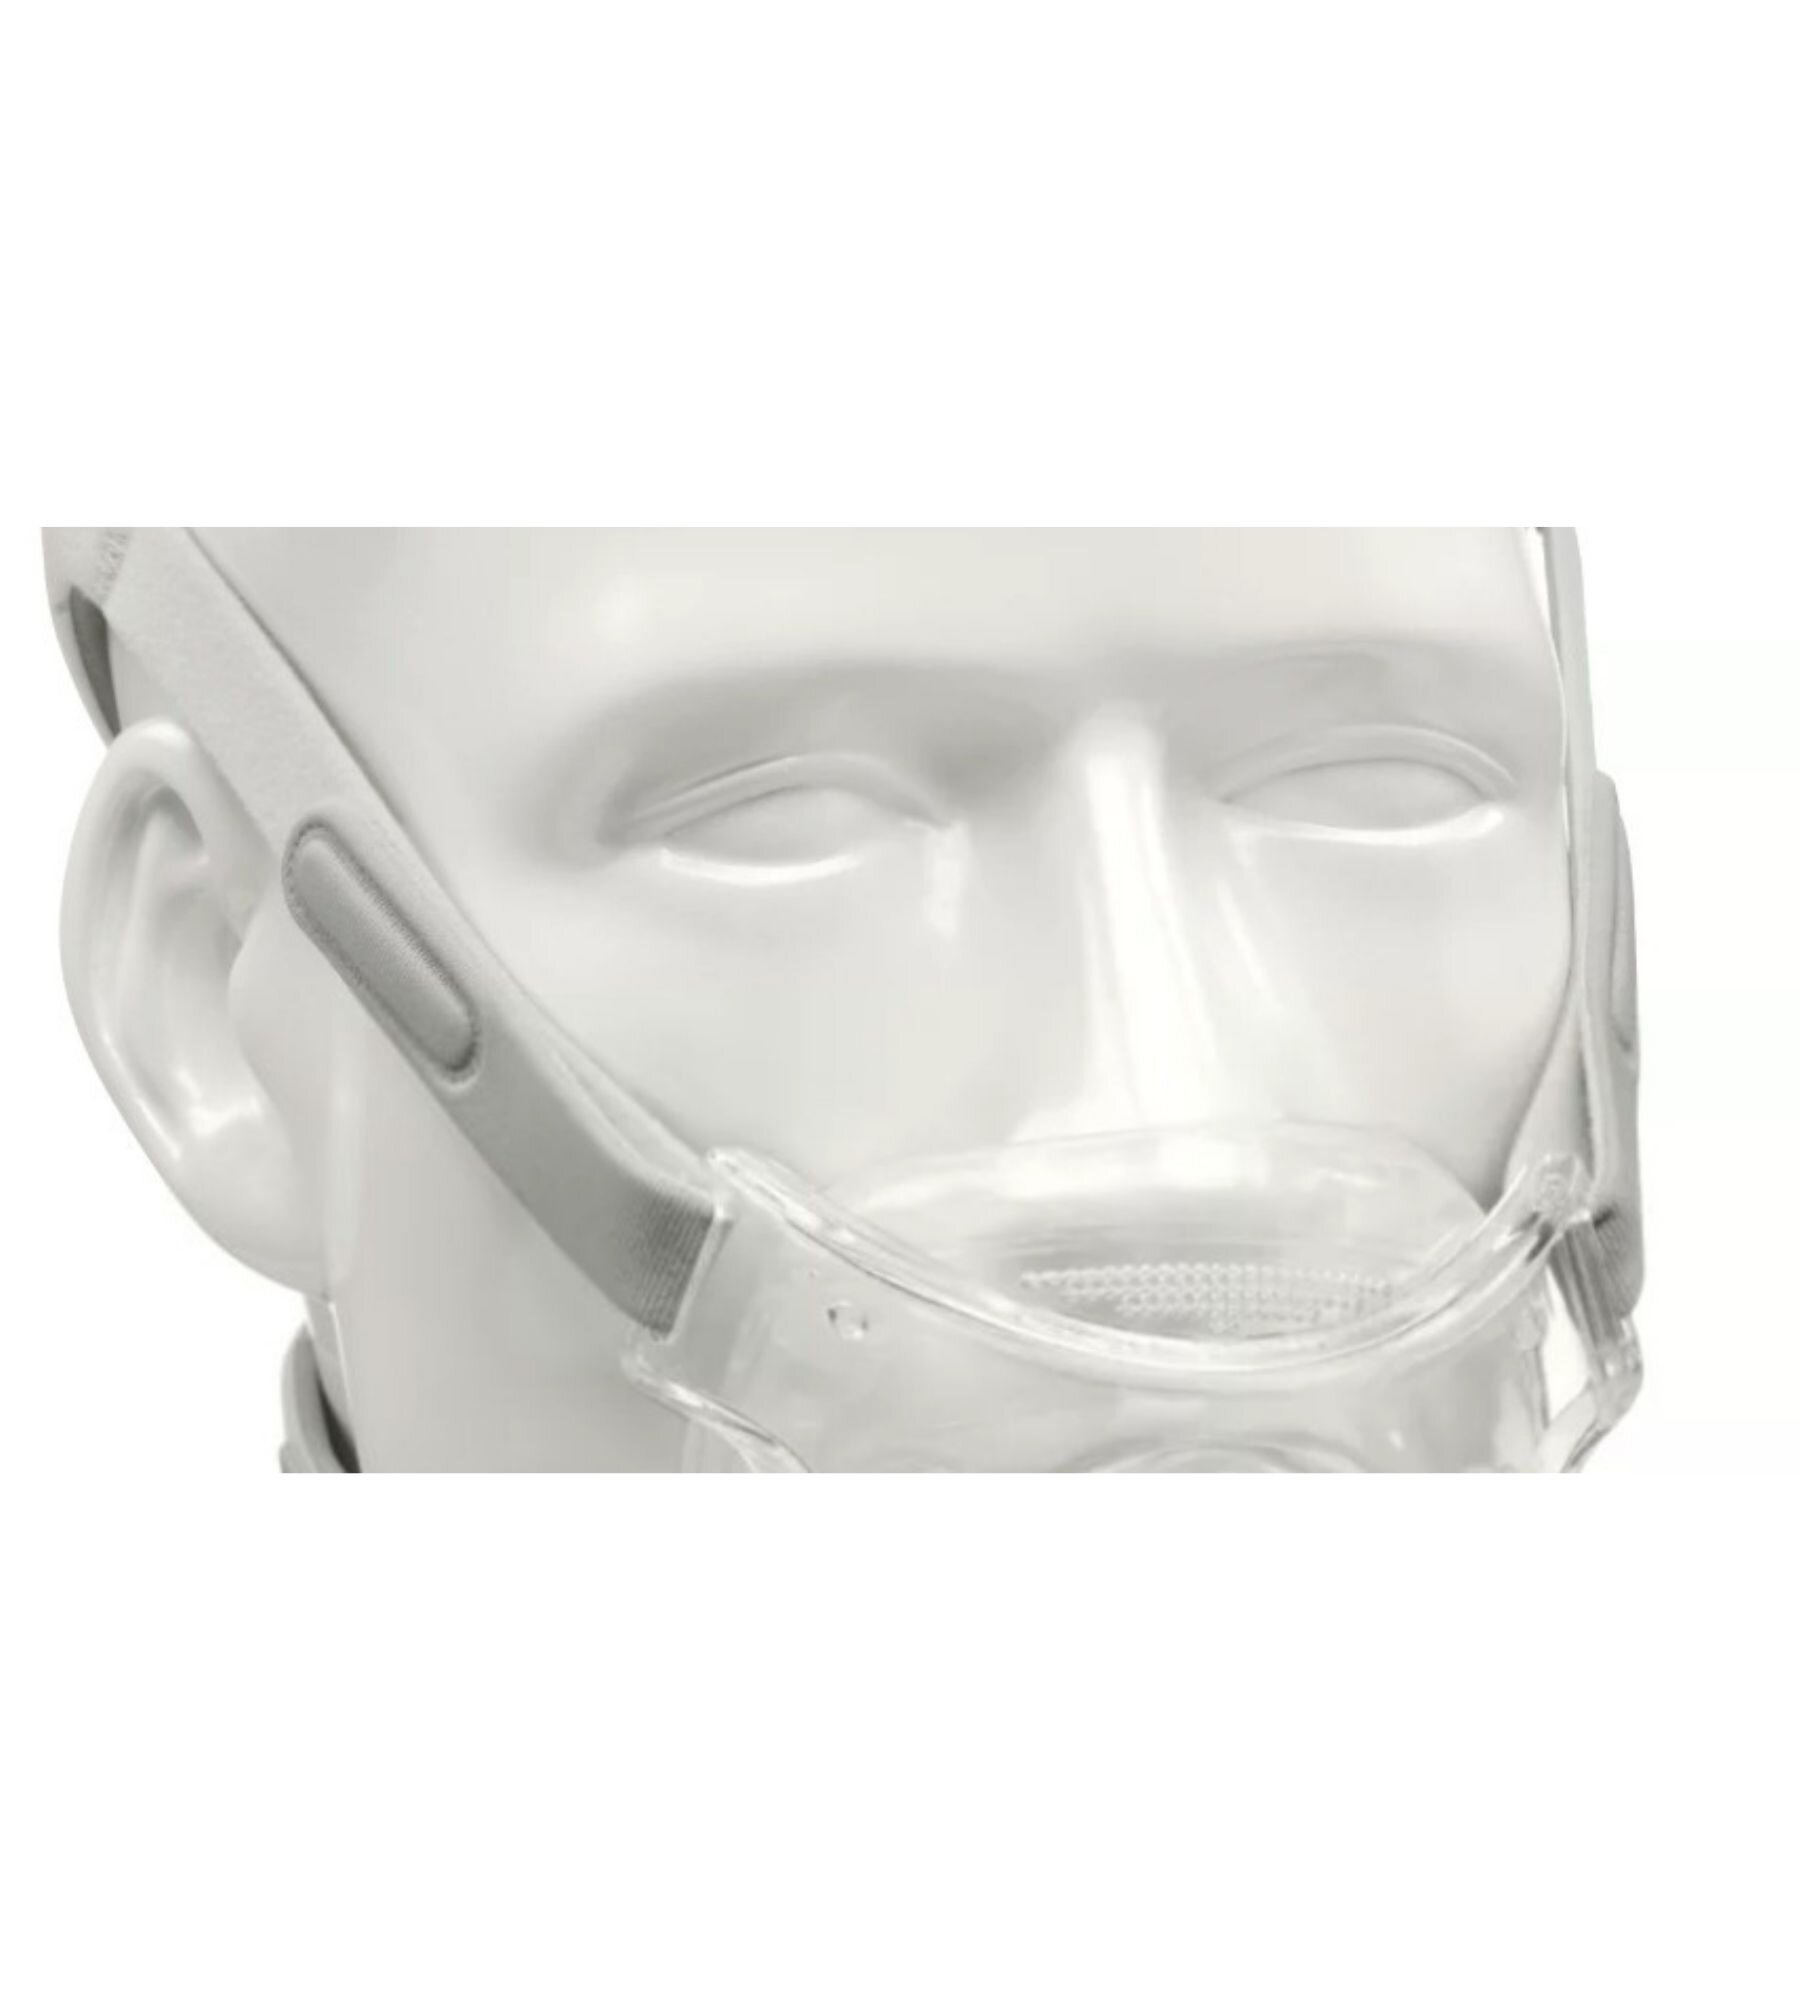 Amara View Full Face Mask